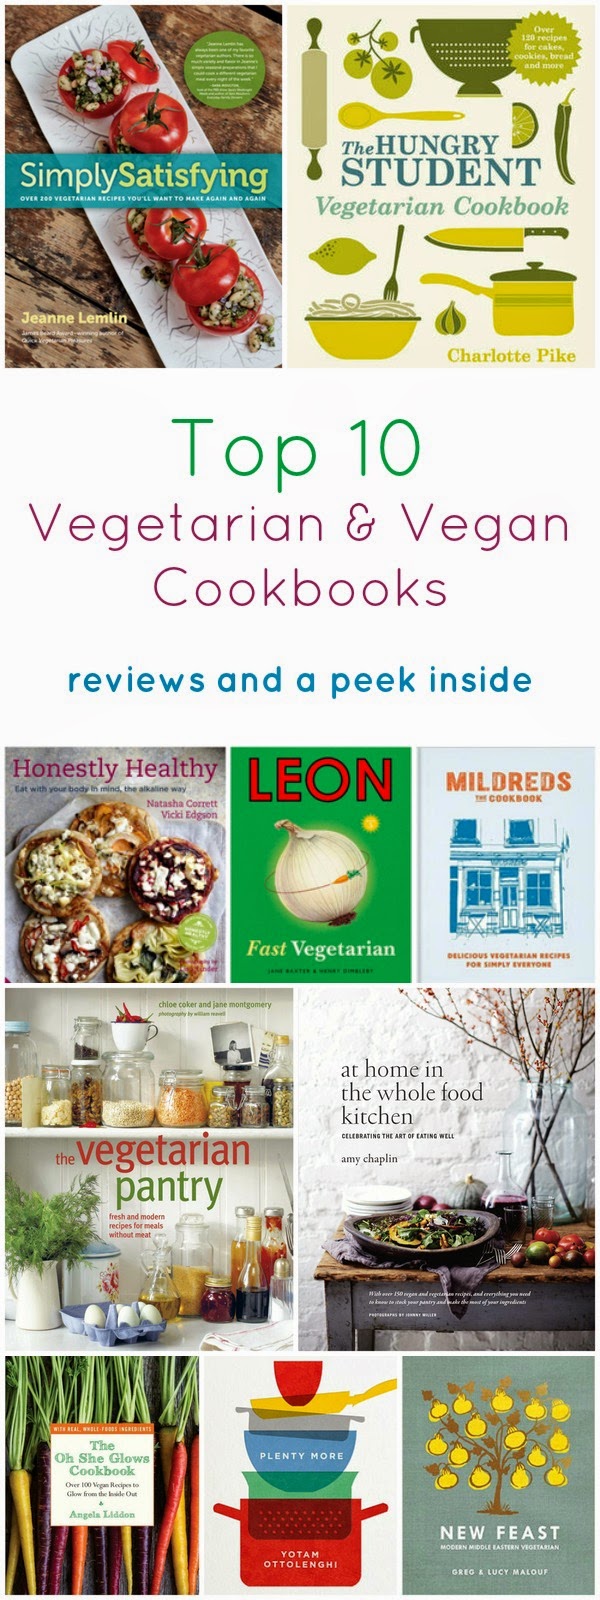 Top 10 Vegetarian and Vegan Cookbooks for National Vegetarian Week - Tinned Tomatoes